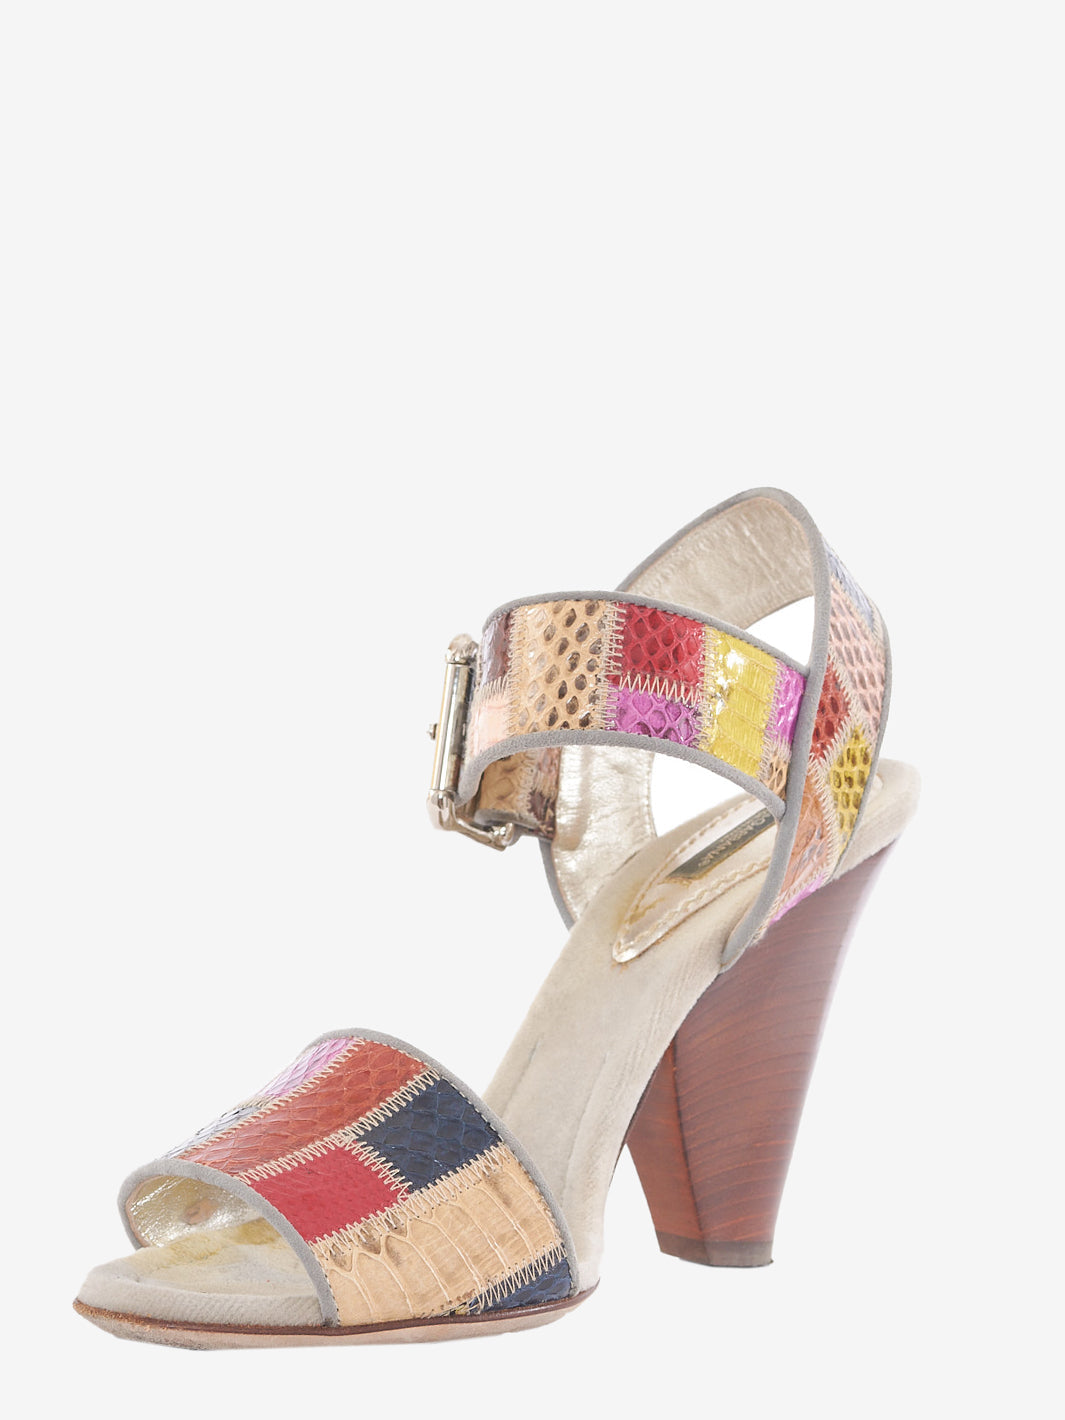 Prada patchwork wood heel sandal